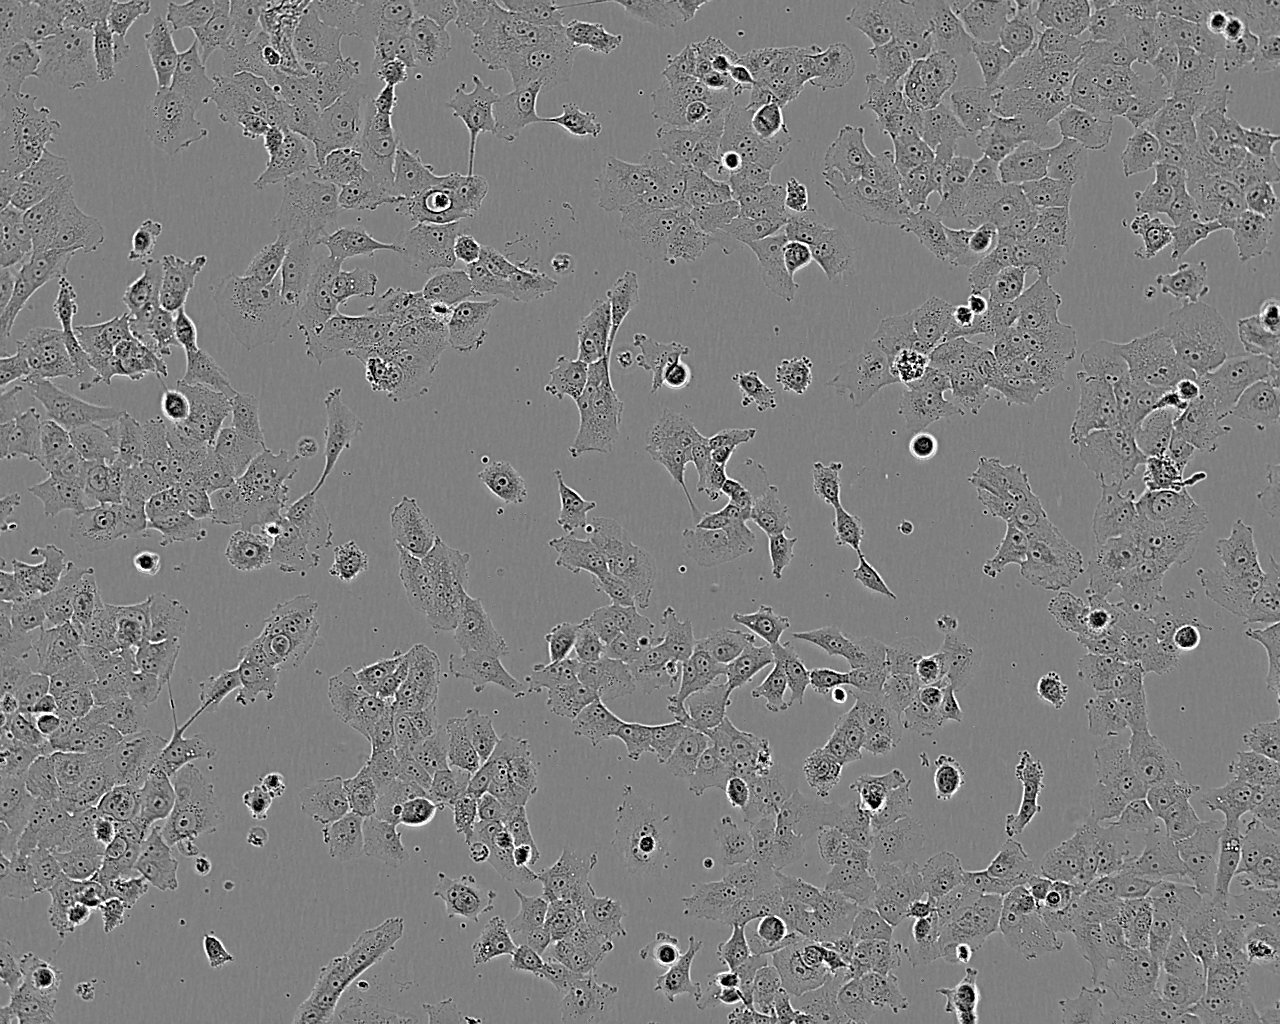 NMC-G1 epithelioid cells人脑胶质细胞系,NMC-G1 epithelioid cells